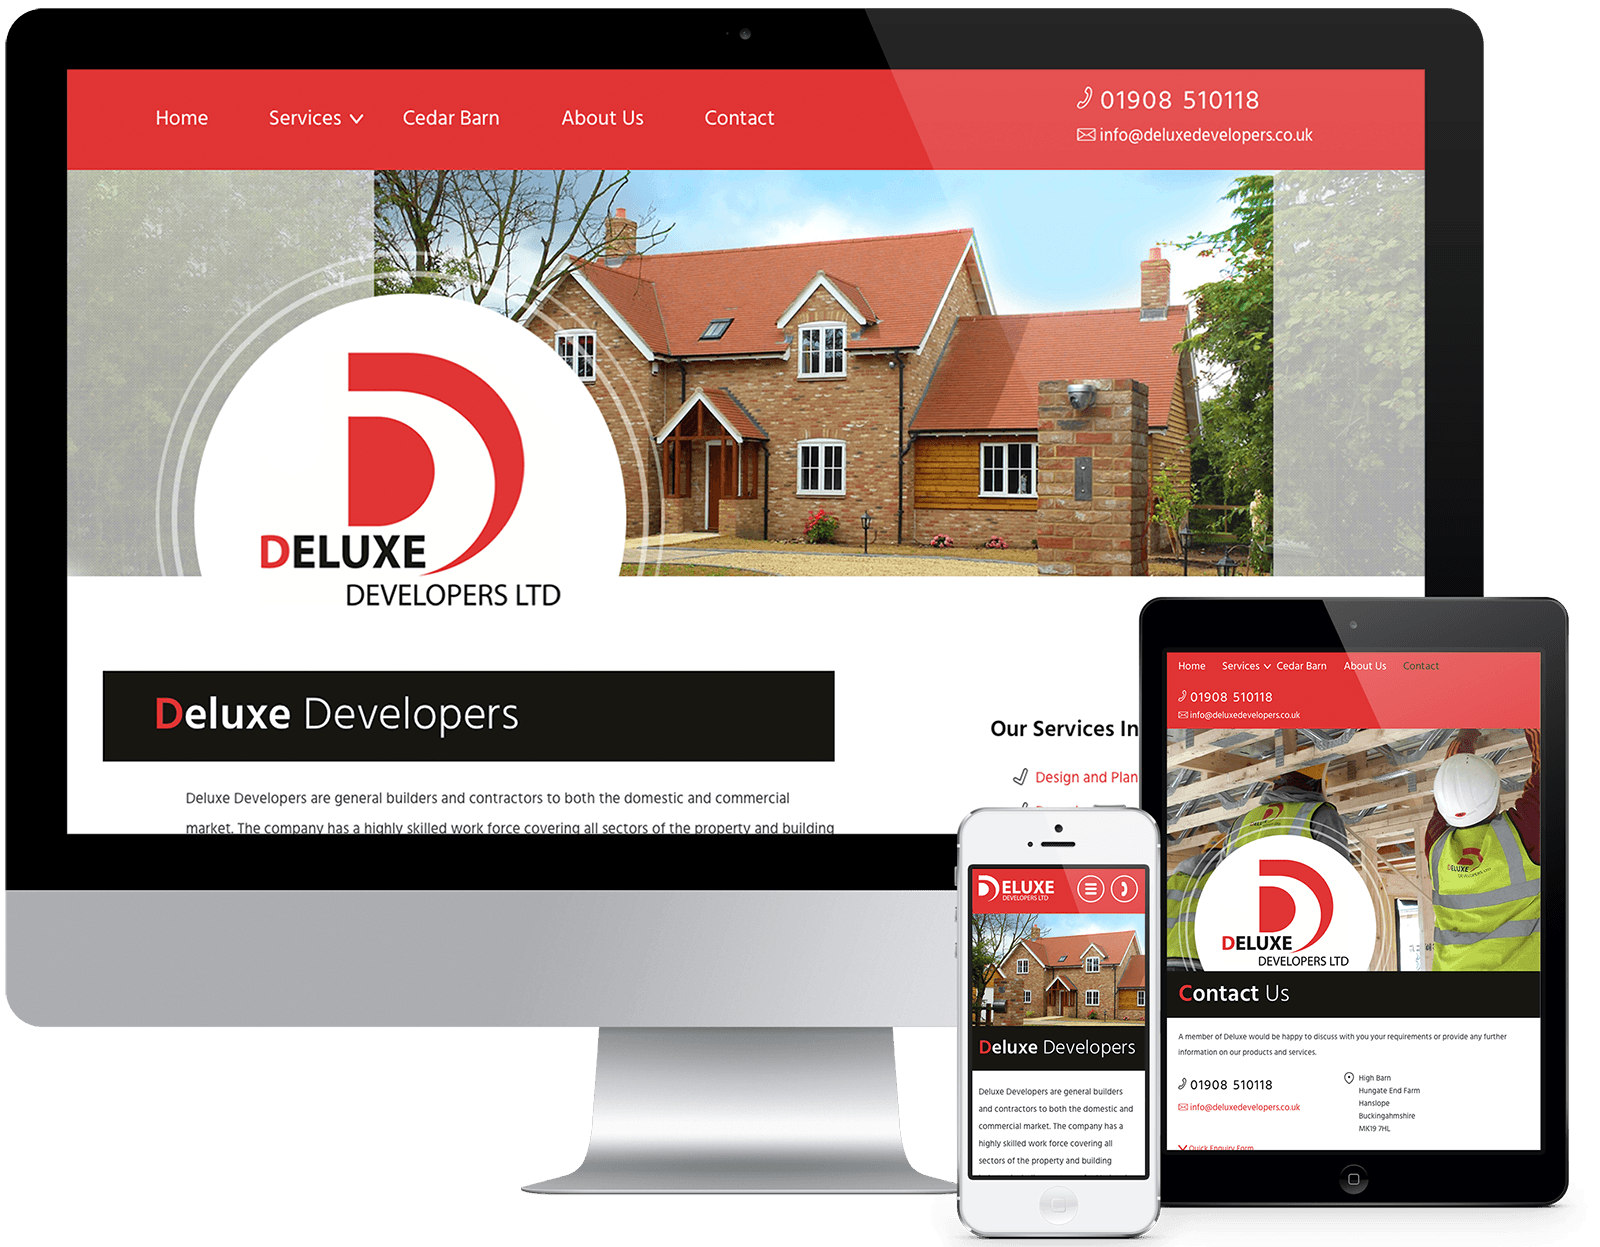 Deluxe Developers - Visit the Website